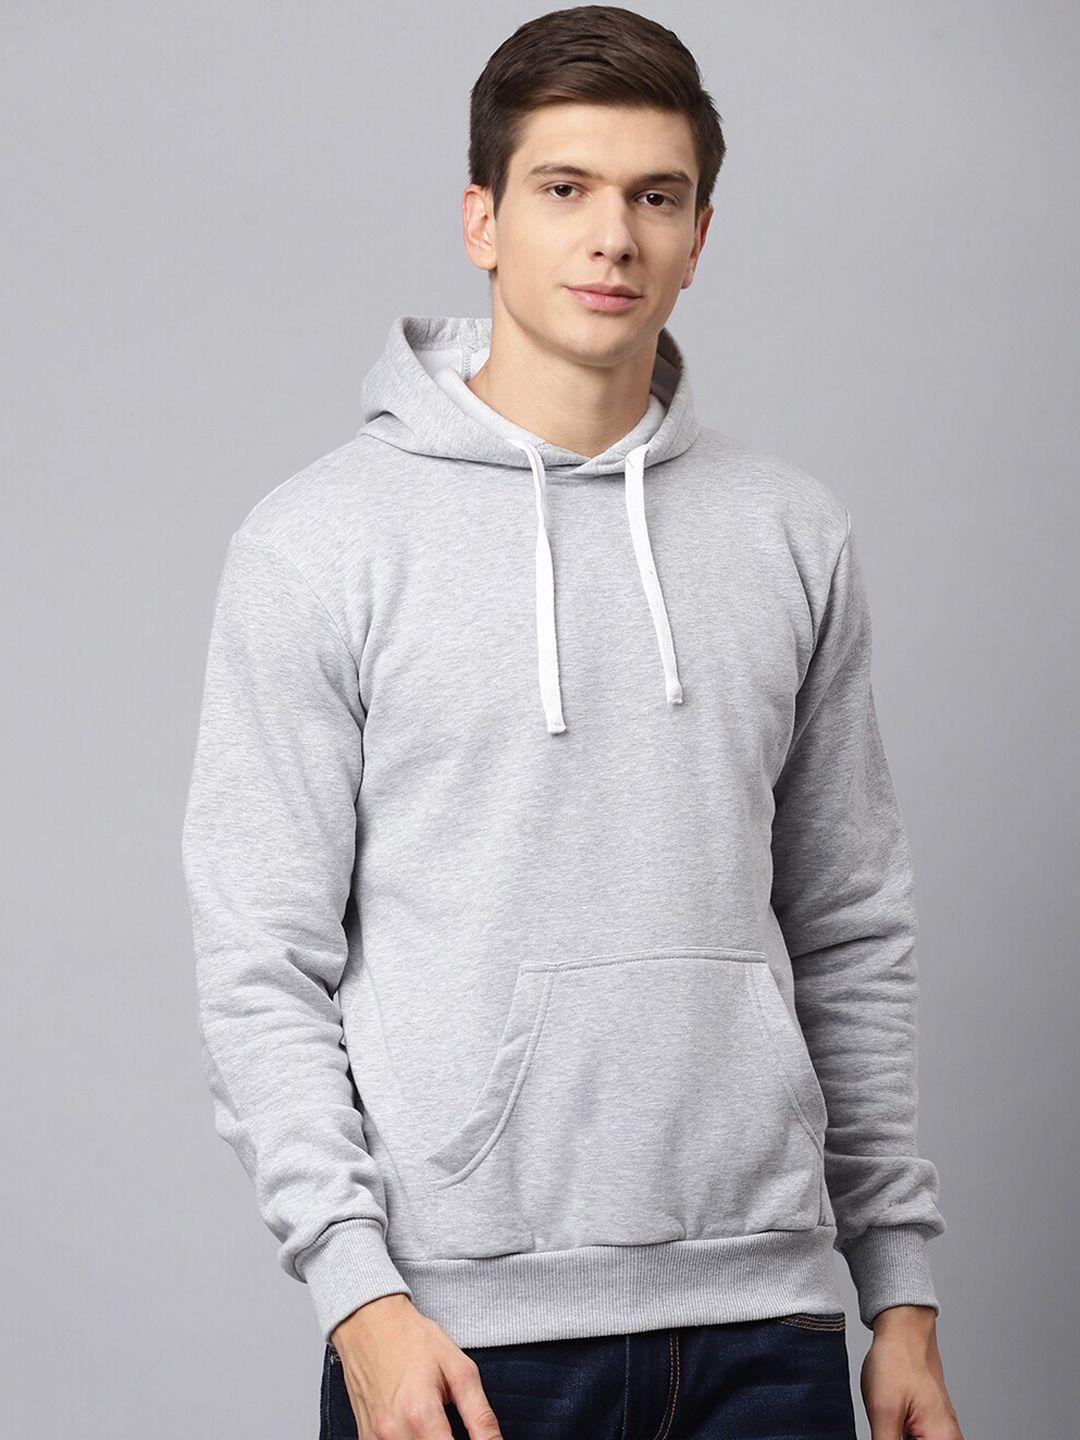 campus-sutra-men-grey-hooded-cotton-sweatshirt